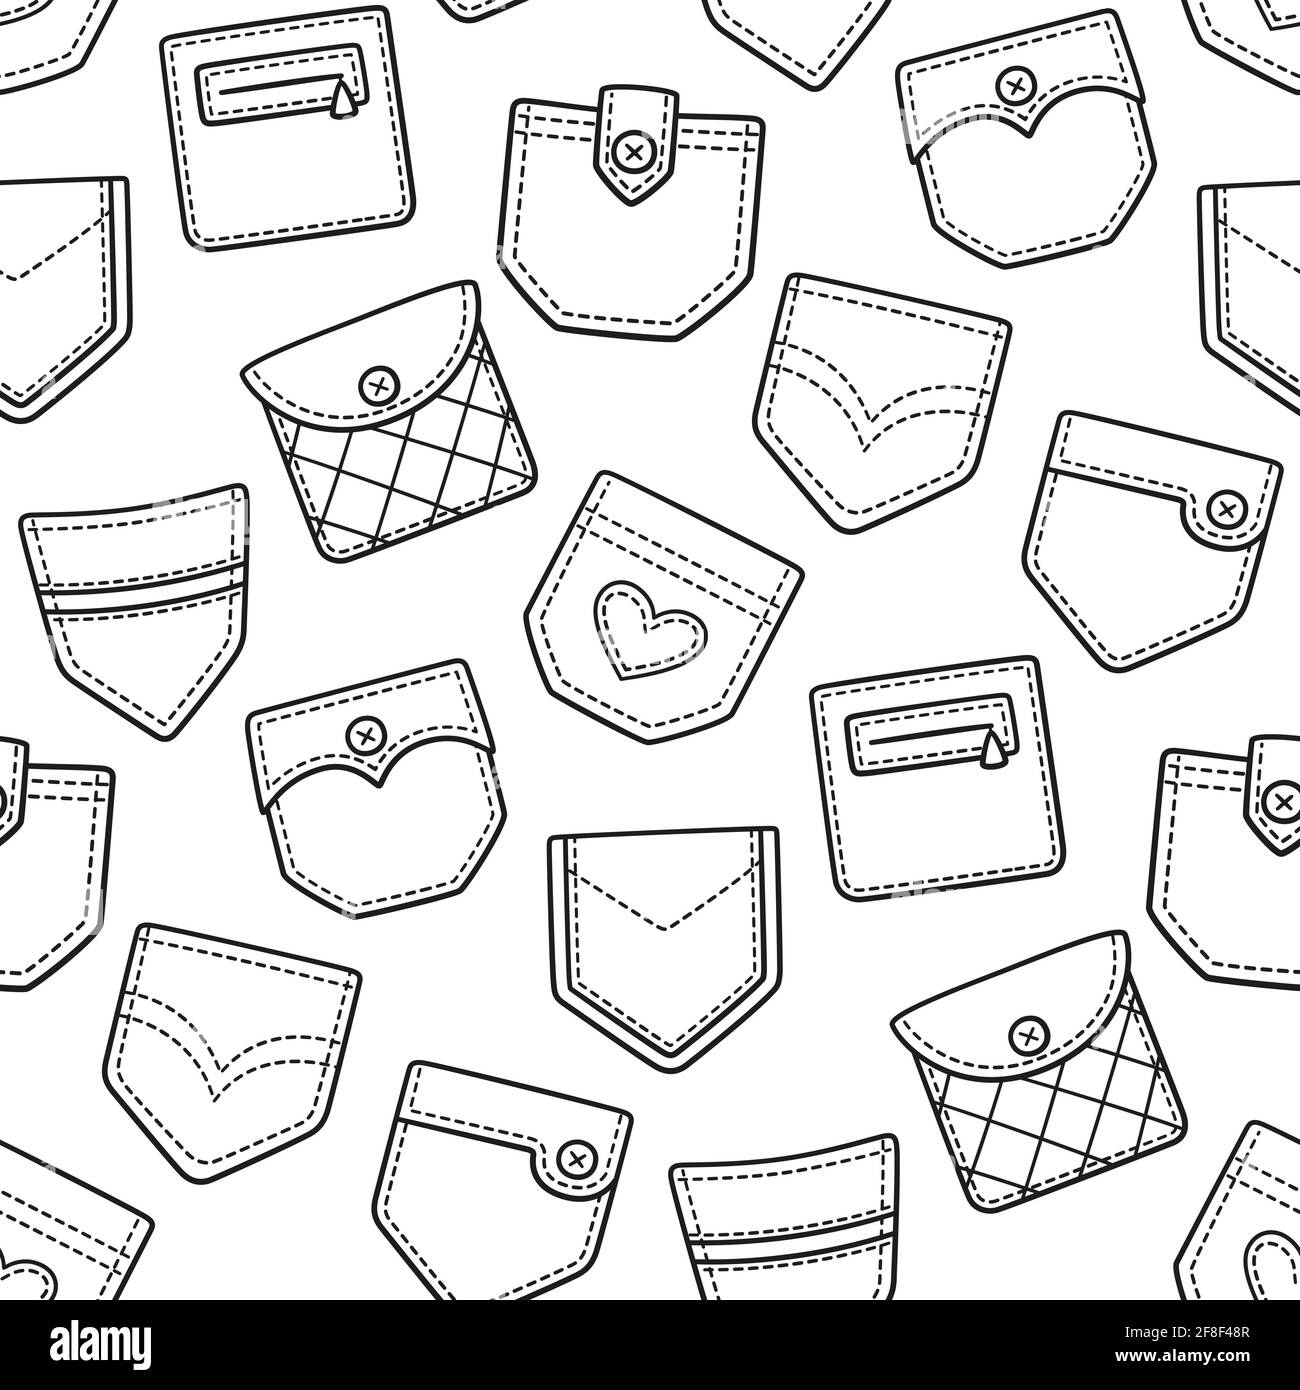 https://c8.alamy.com/comp/2F8F48R/seamless-pattern-with-hand-drawn-denim-patch-pockets-doodle-vector-illustration-2F8F48R.jpg